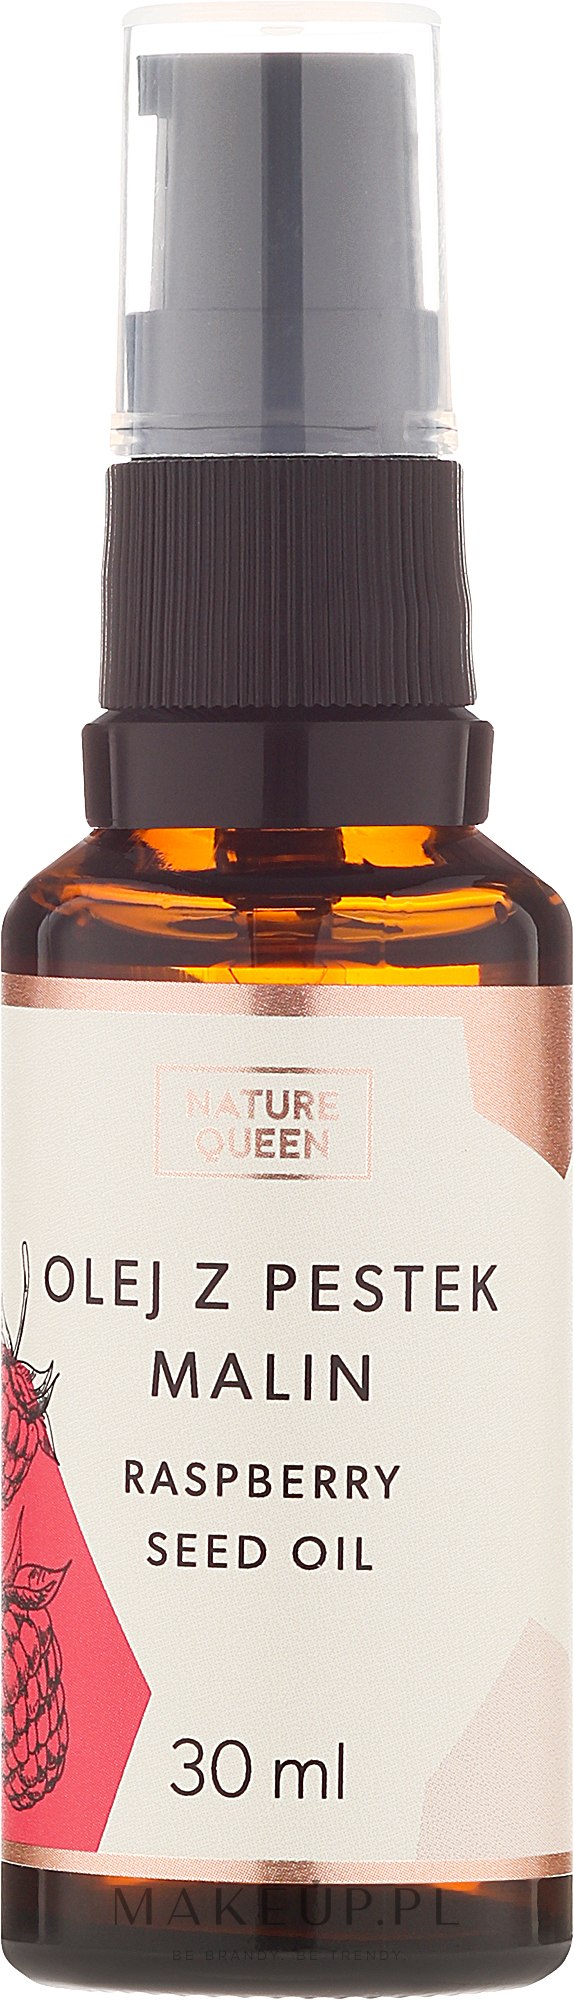 Olej z pestek malin - Nature Queen Raspberry Seed Oil — Zdjęcie 30 ml